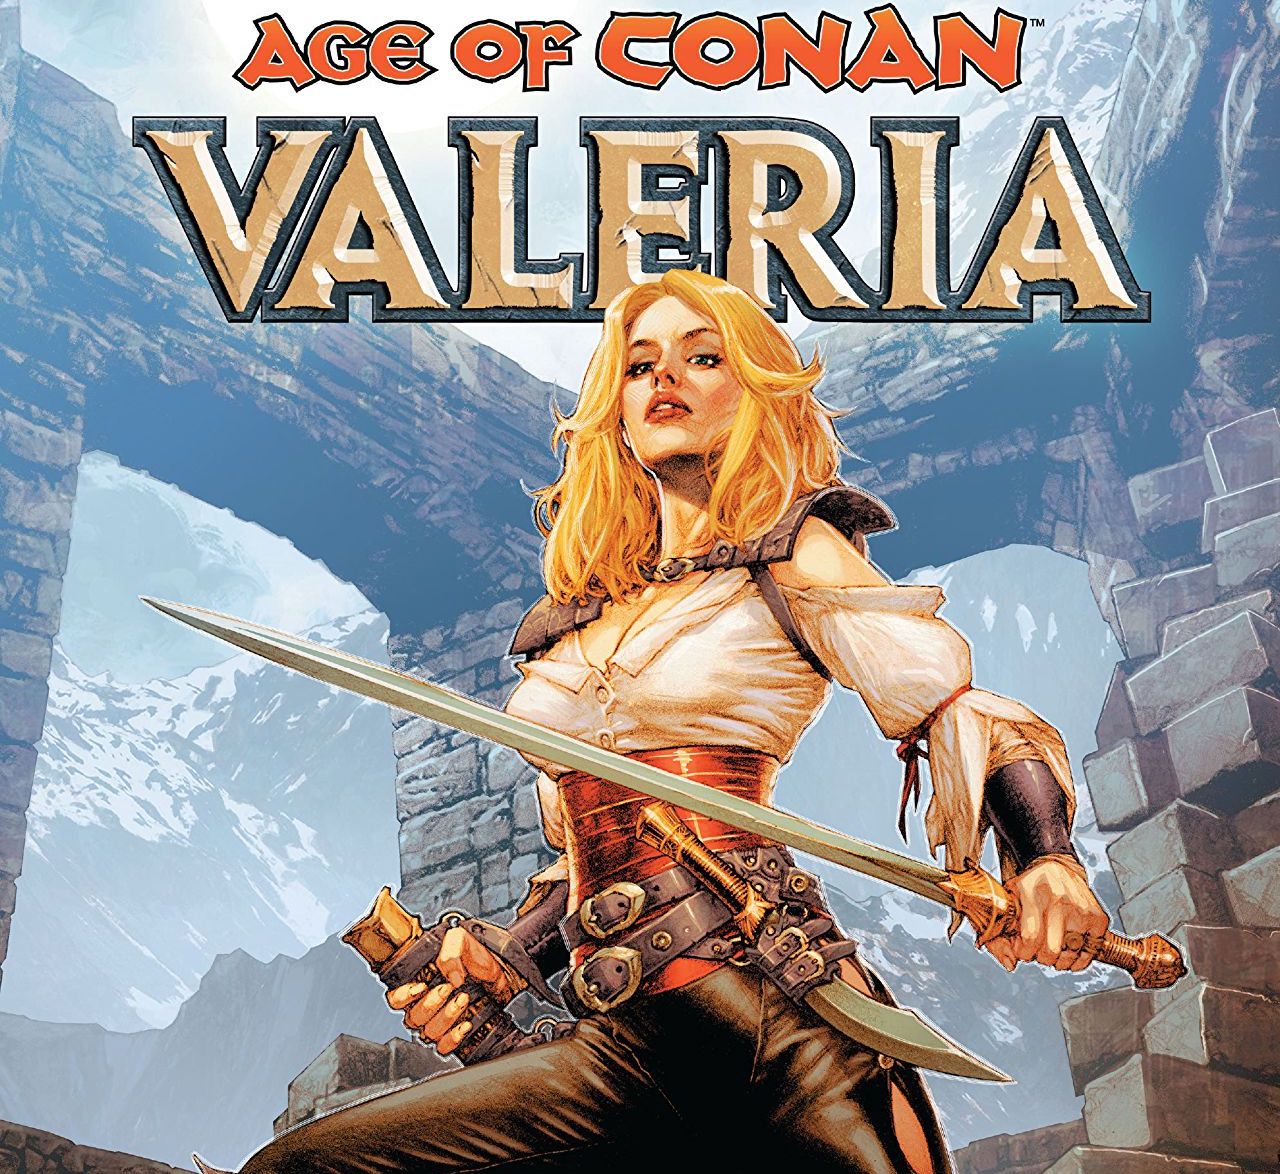 Age of Conan: Valeria TPB Review